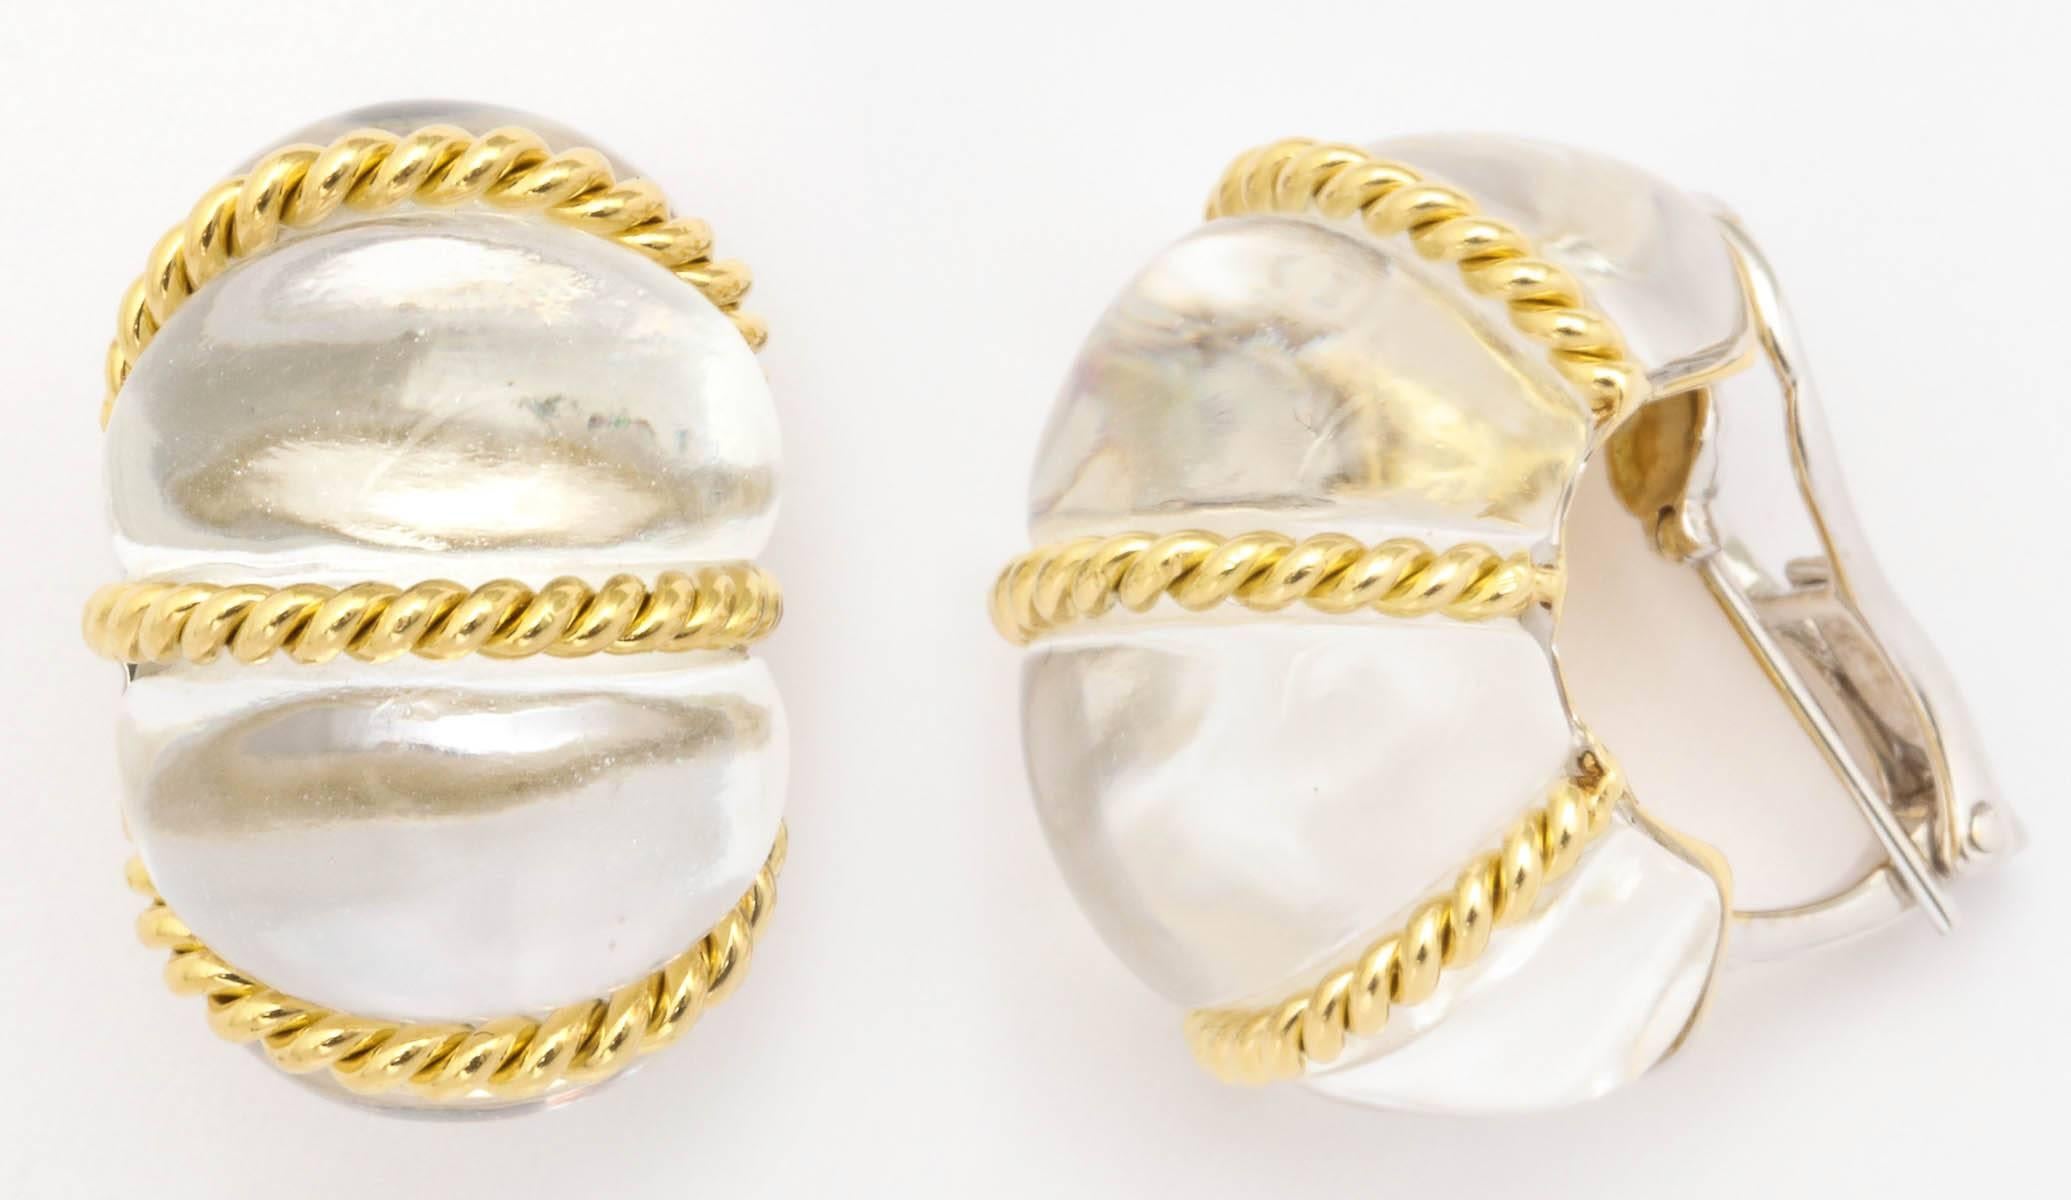 18k yellow & white gold rock crystal shrimp design earrings
adjustable post/clip closure